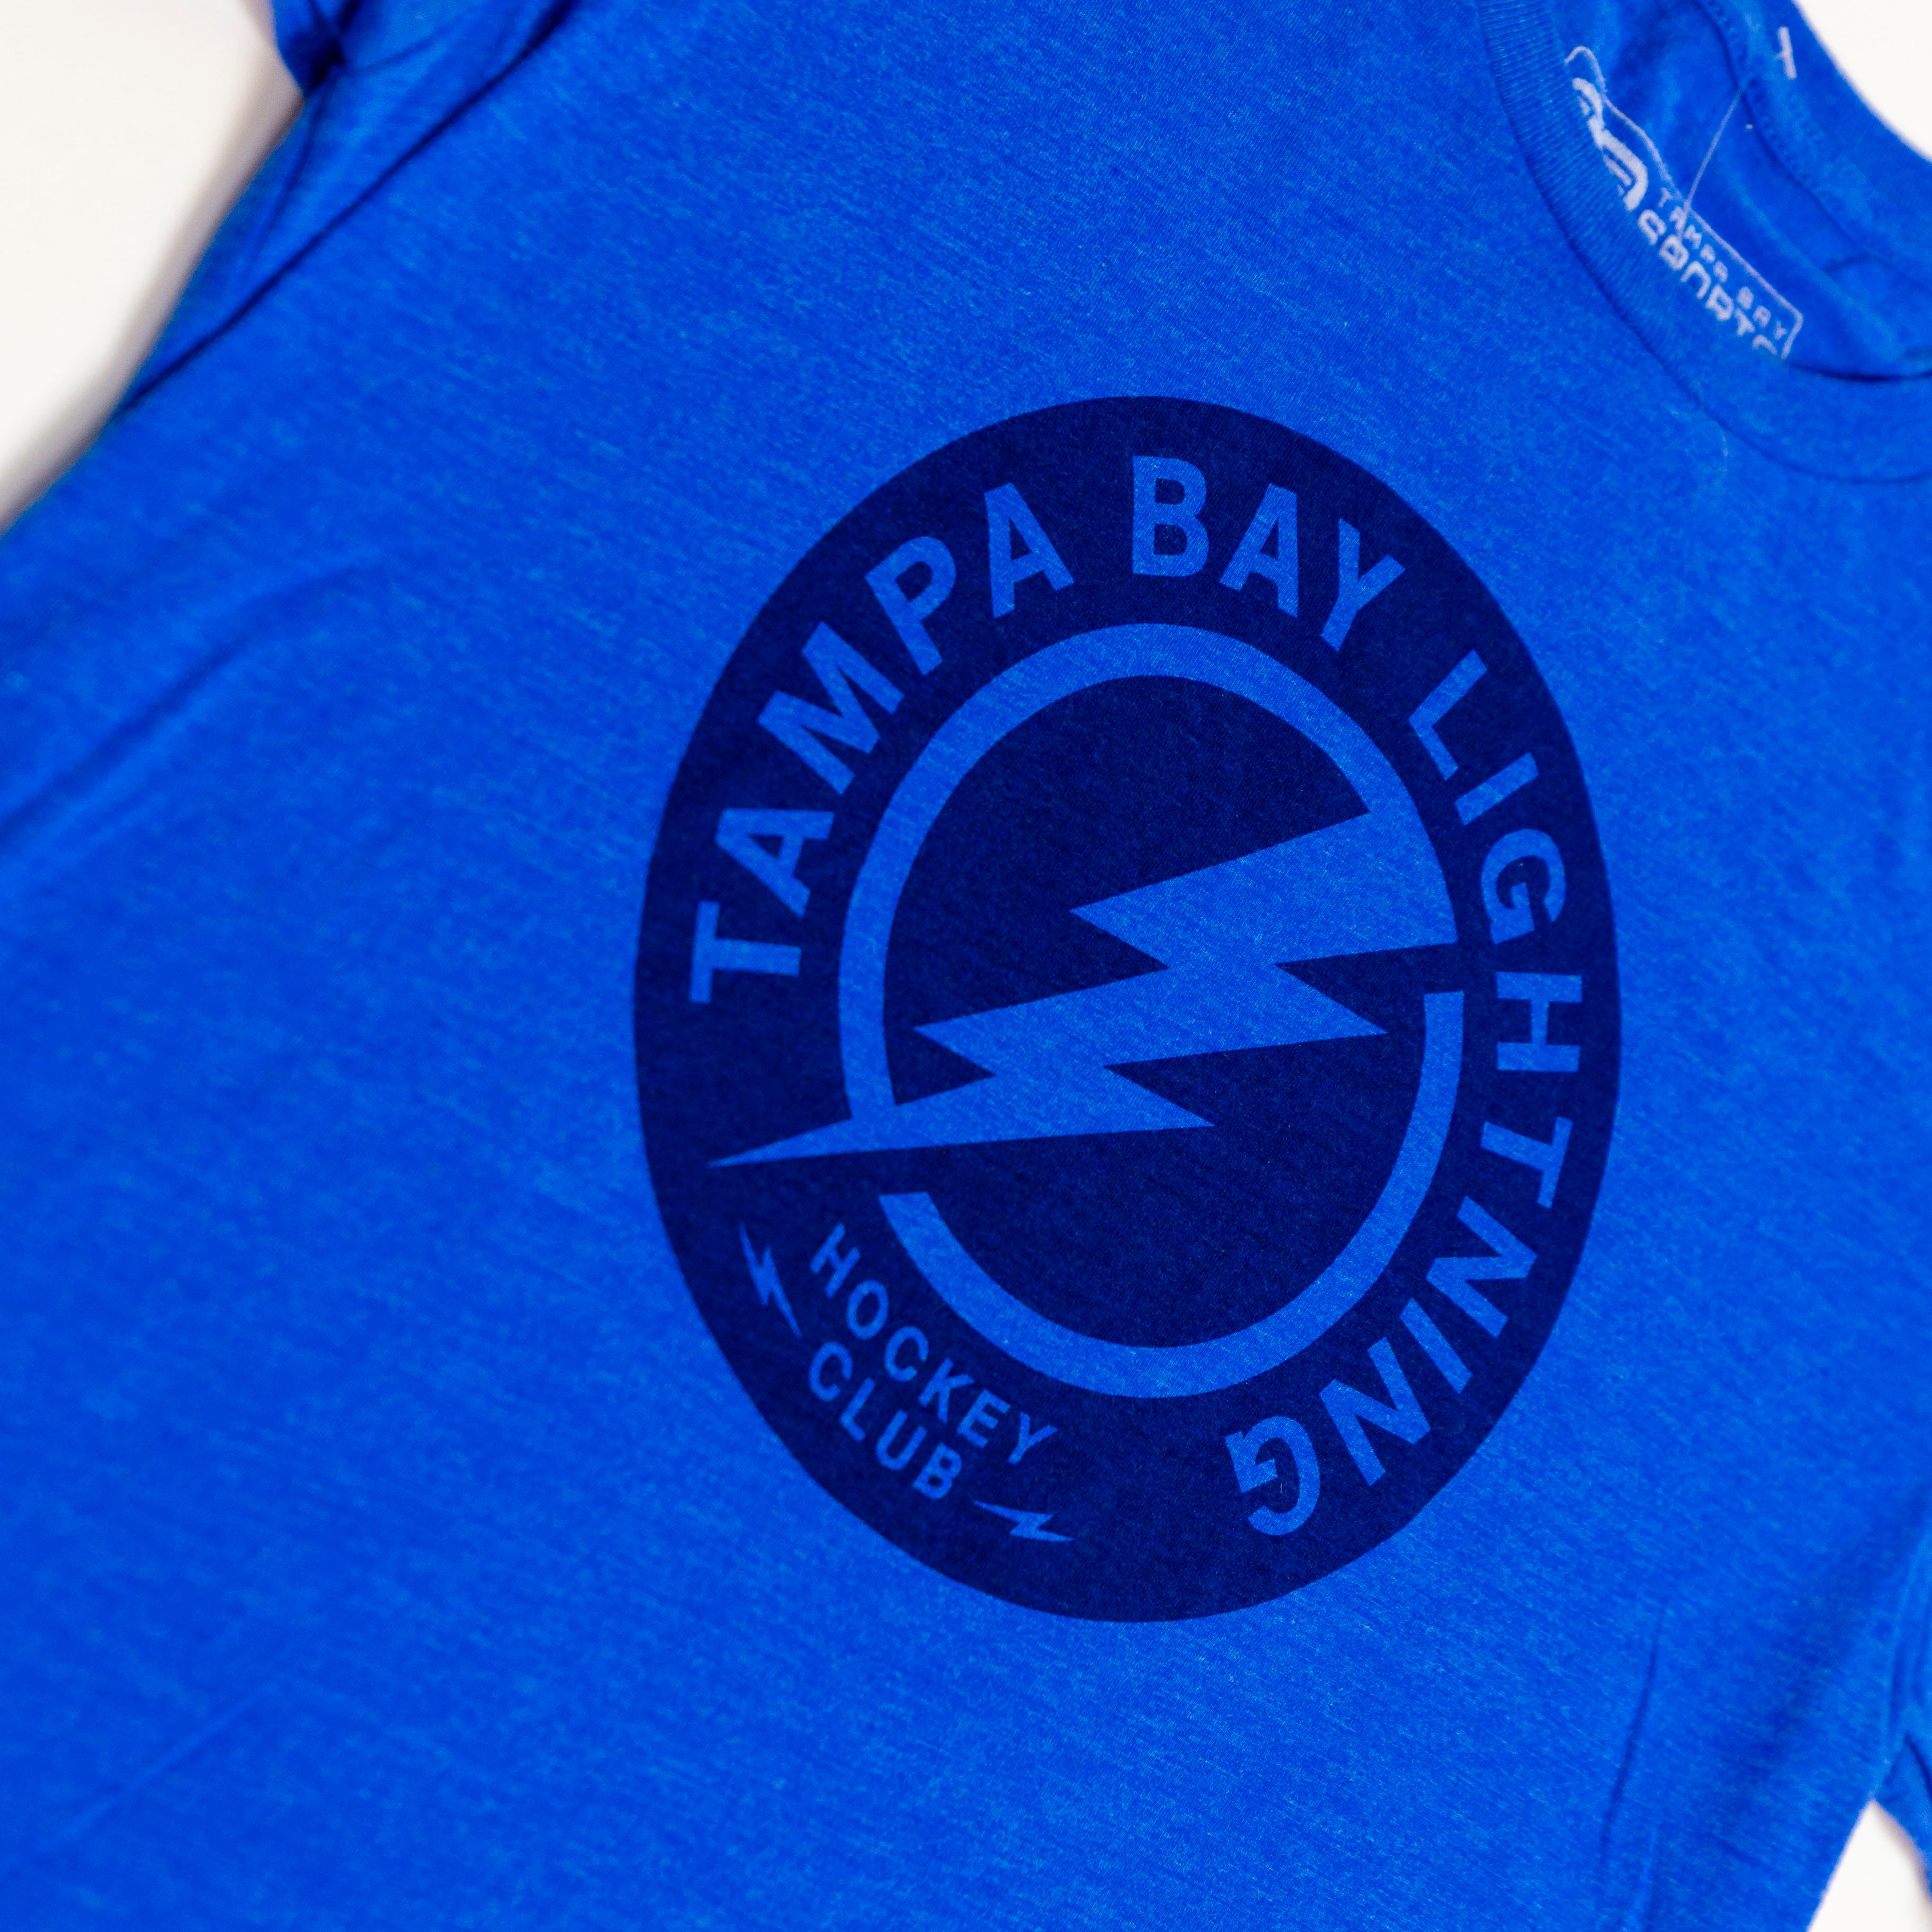 Tampa Bay Lightning shirt men's medium grey short sleeve